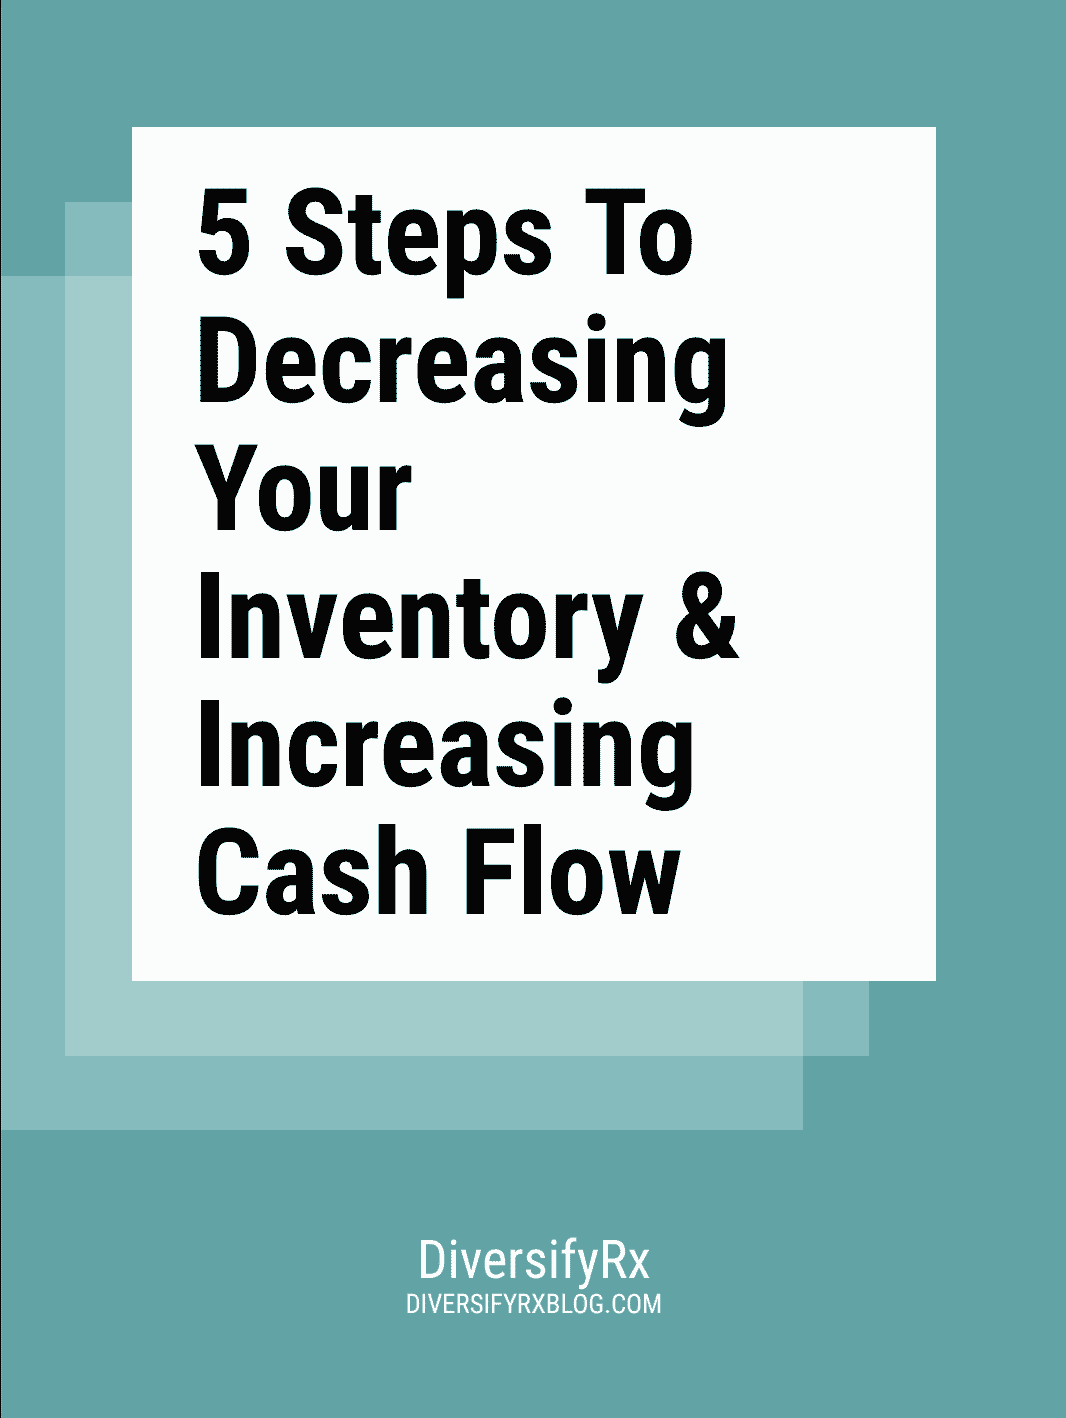 increase cash flow